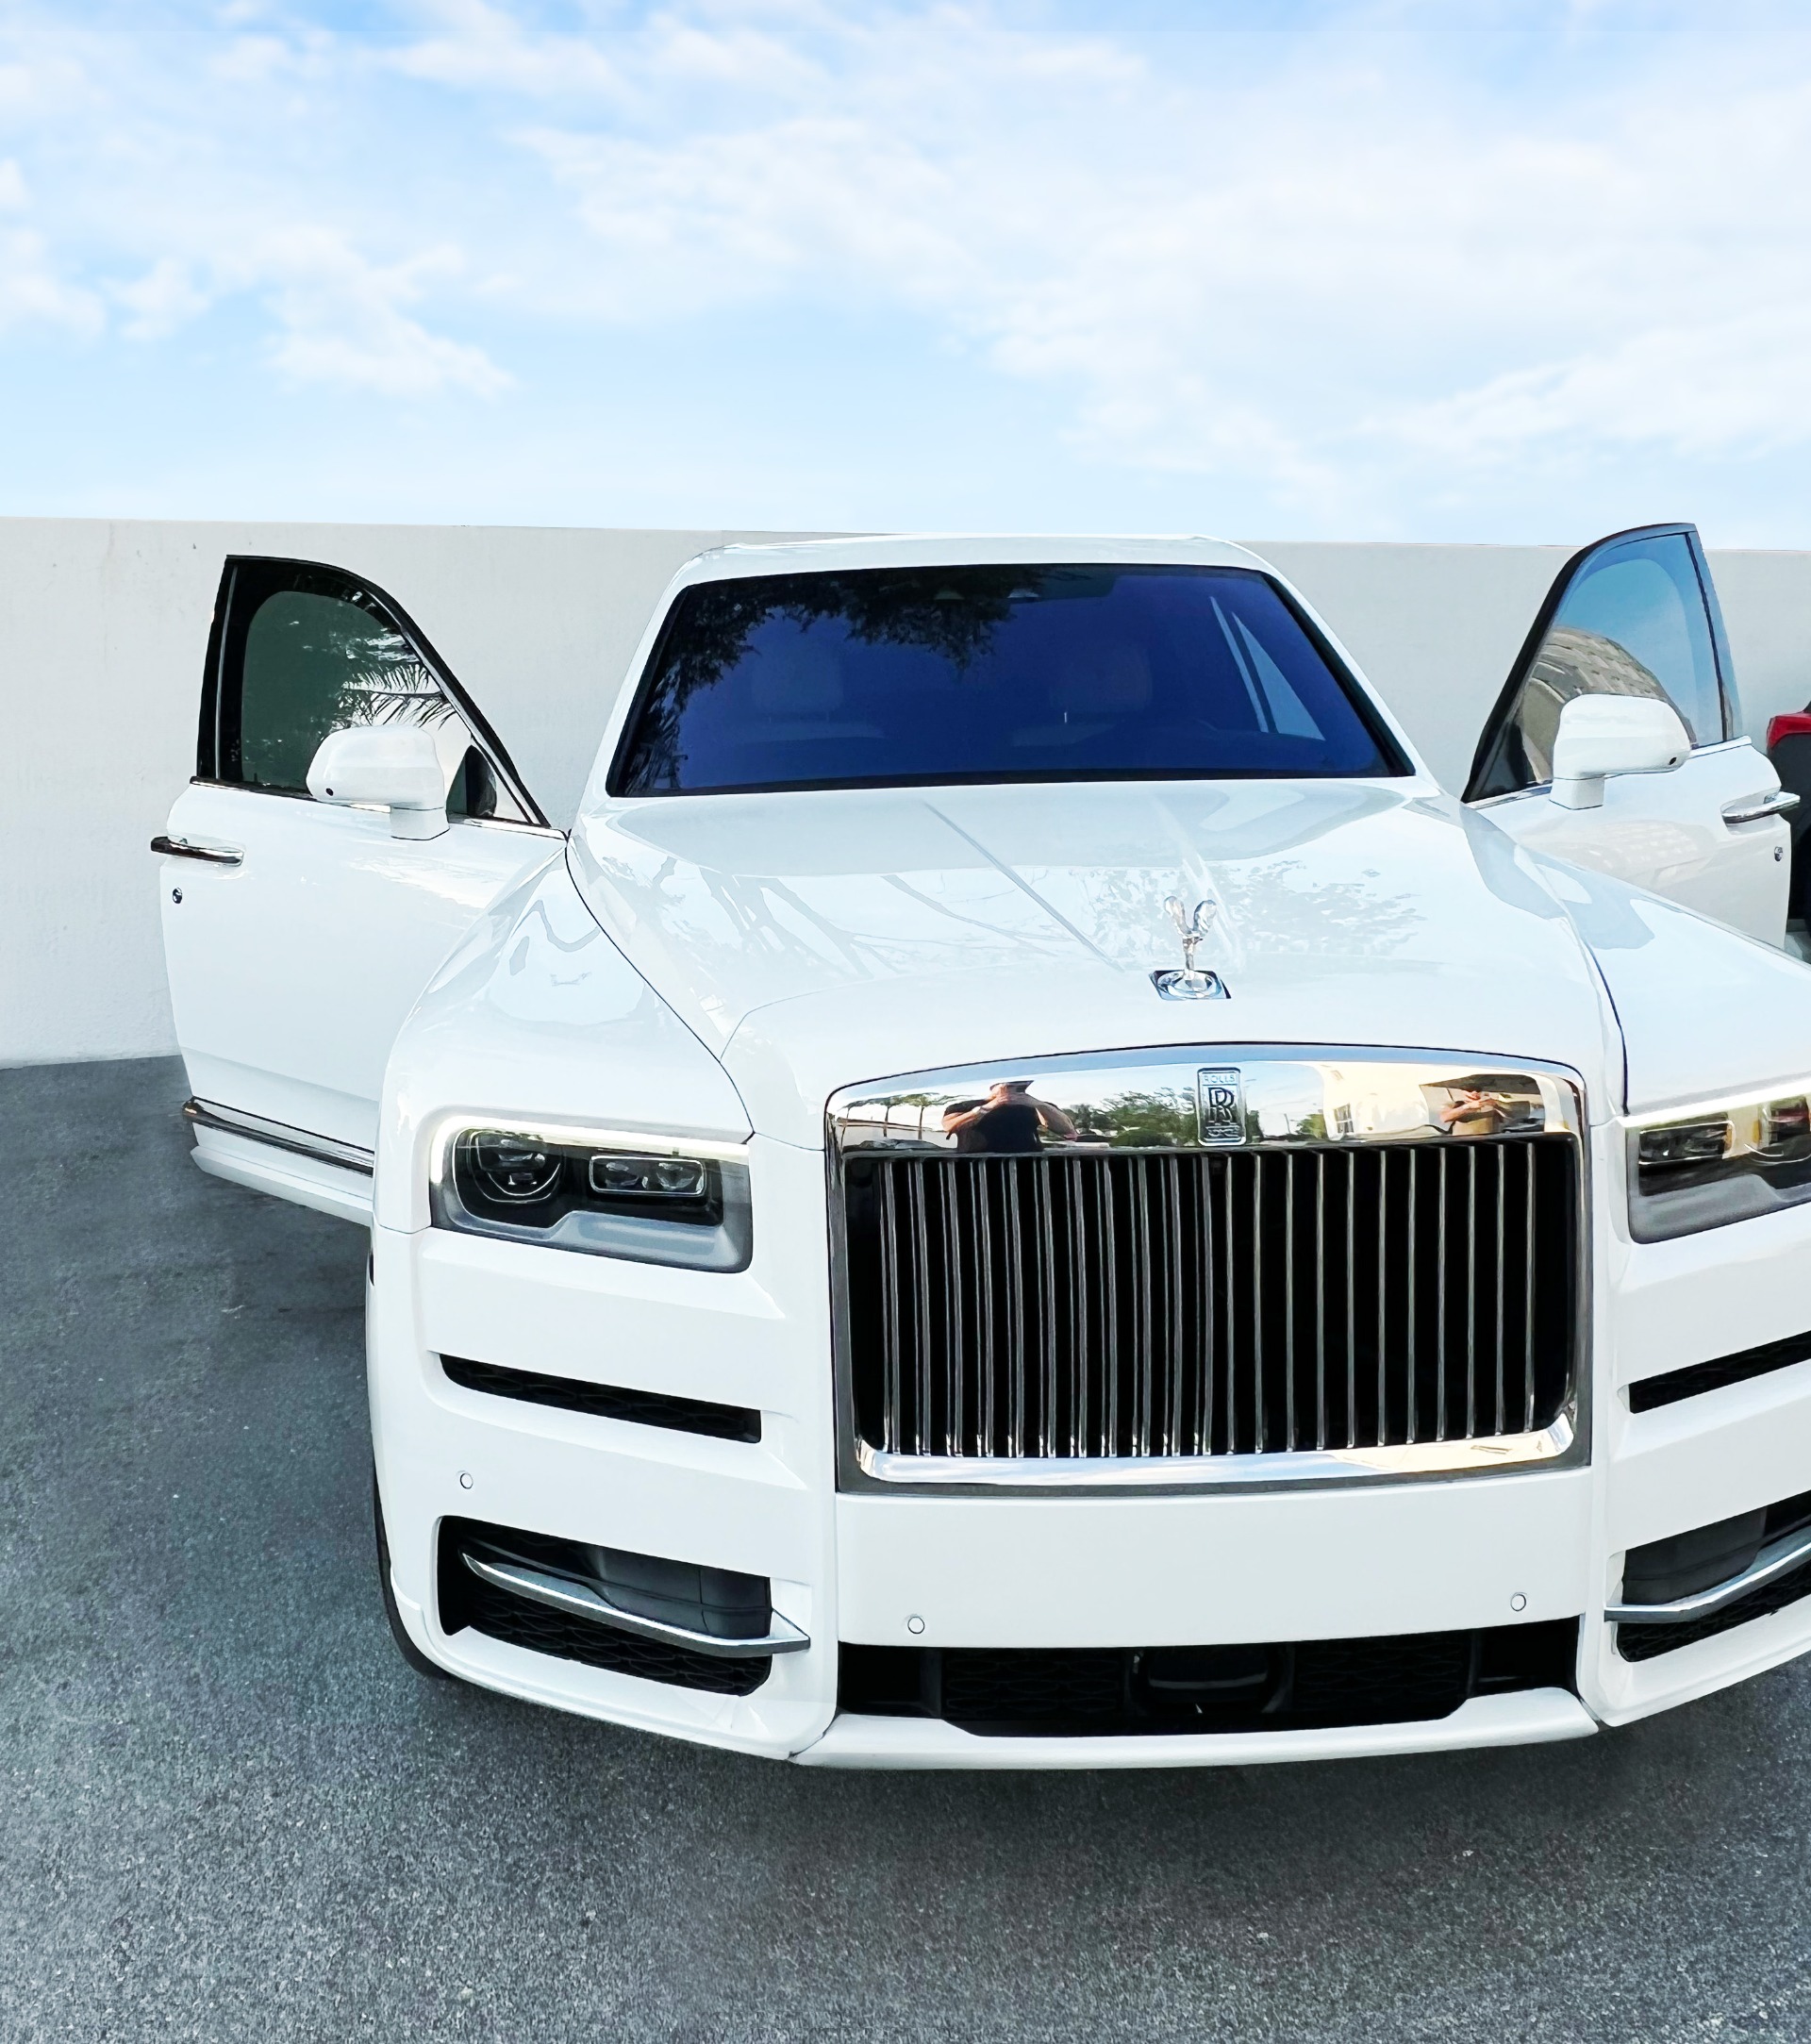 Rolls Royce Phantom Three 6x6 SUV Concept Car